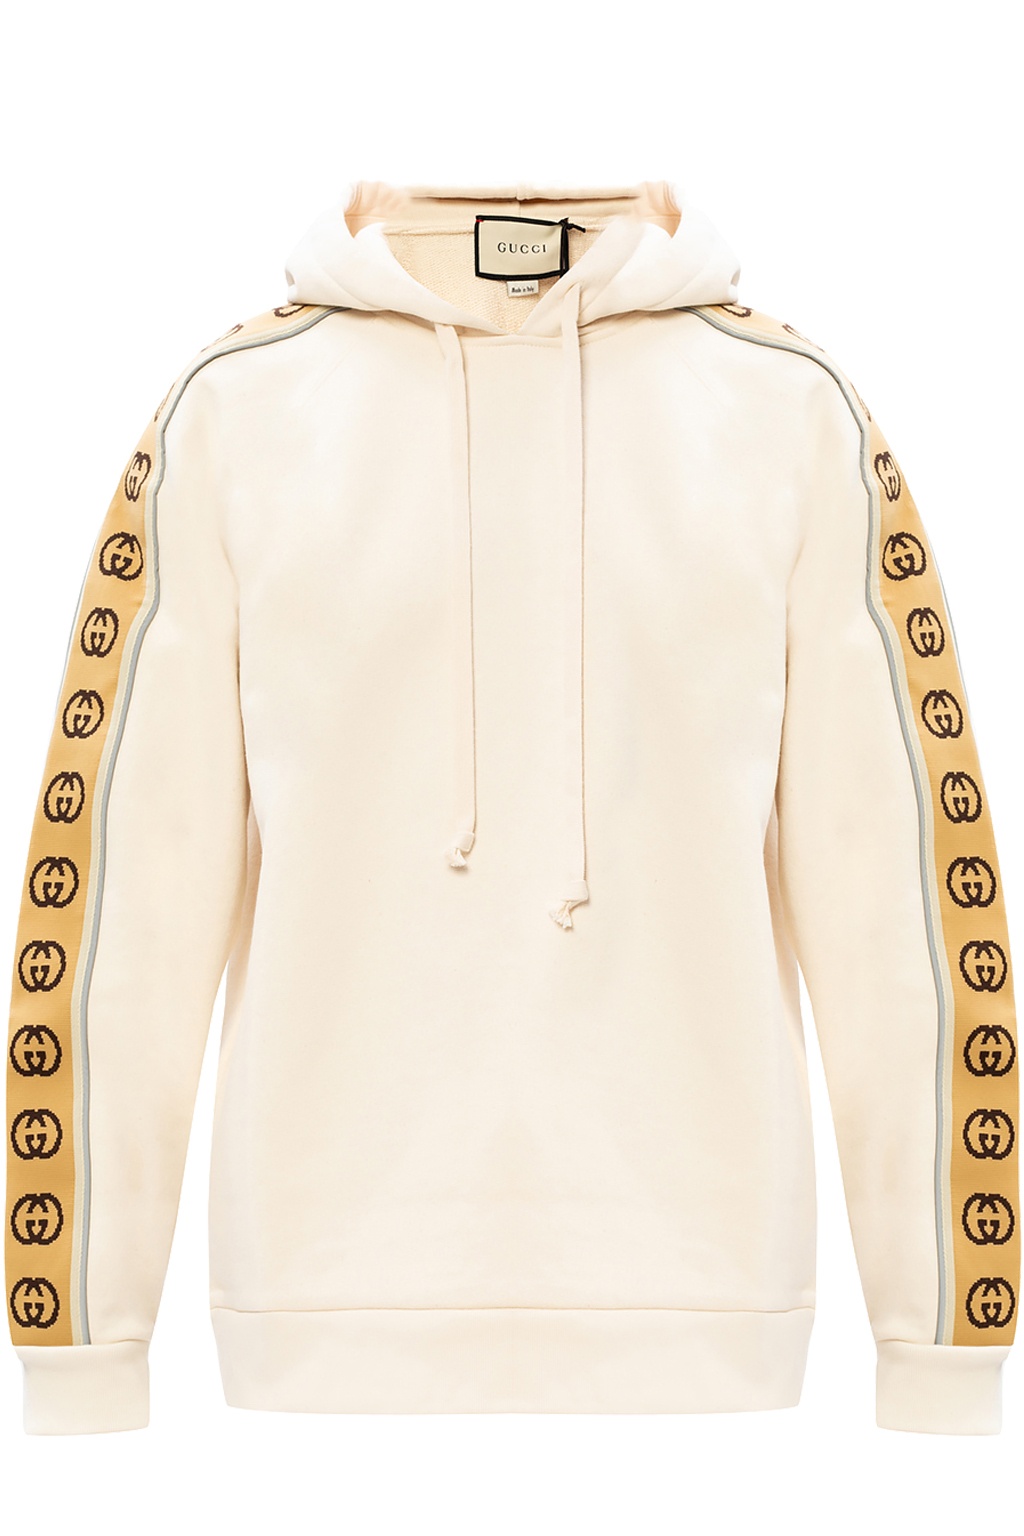 gucci reflective hoodie